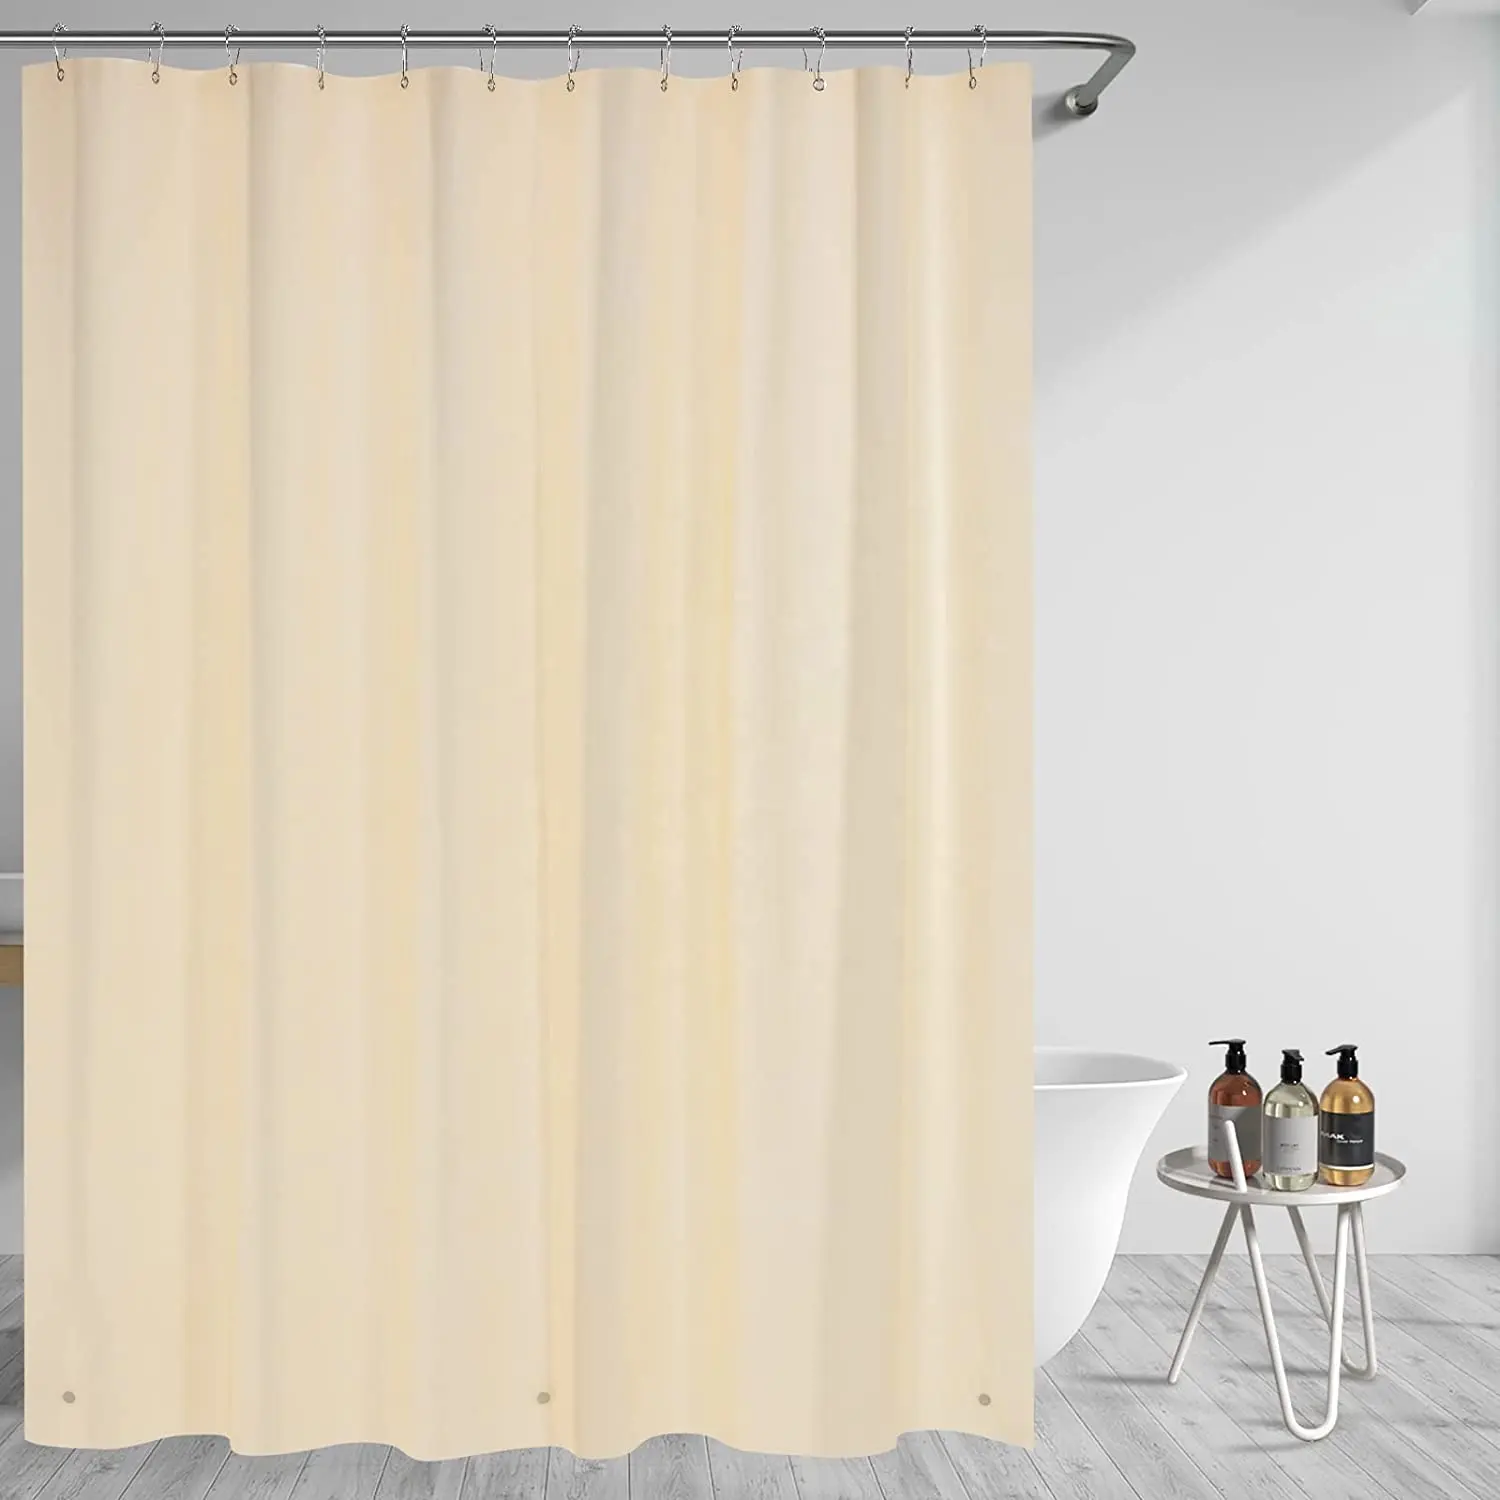 Beige Shower Curtain Liner, Cute Plastic Shower Curtain Liner, Lightweight Waterproof PEVA Cream Shower Curtains for Bathroom